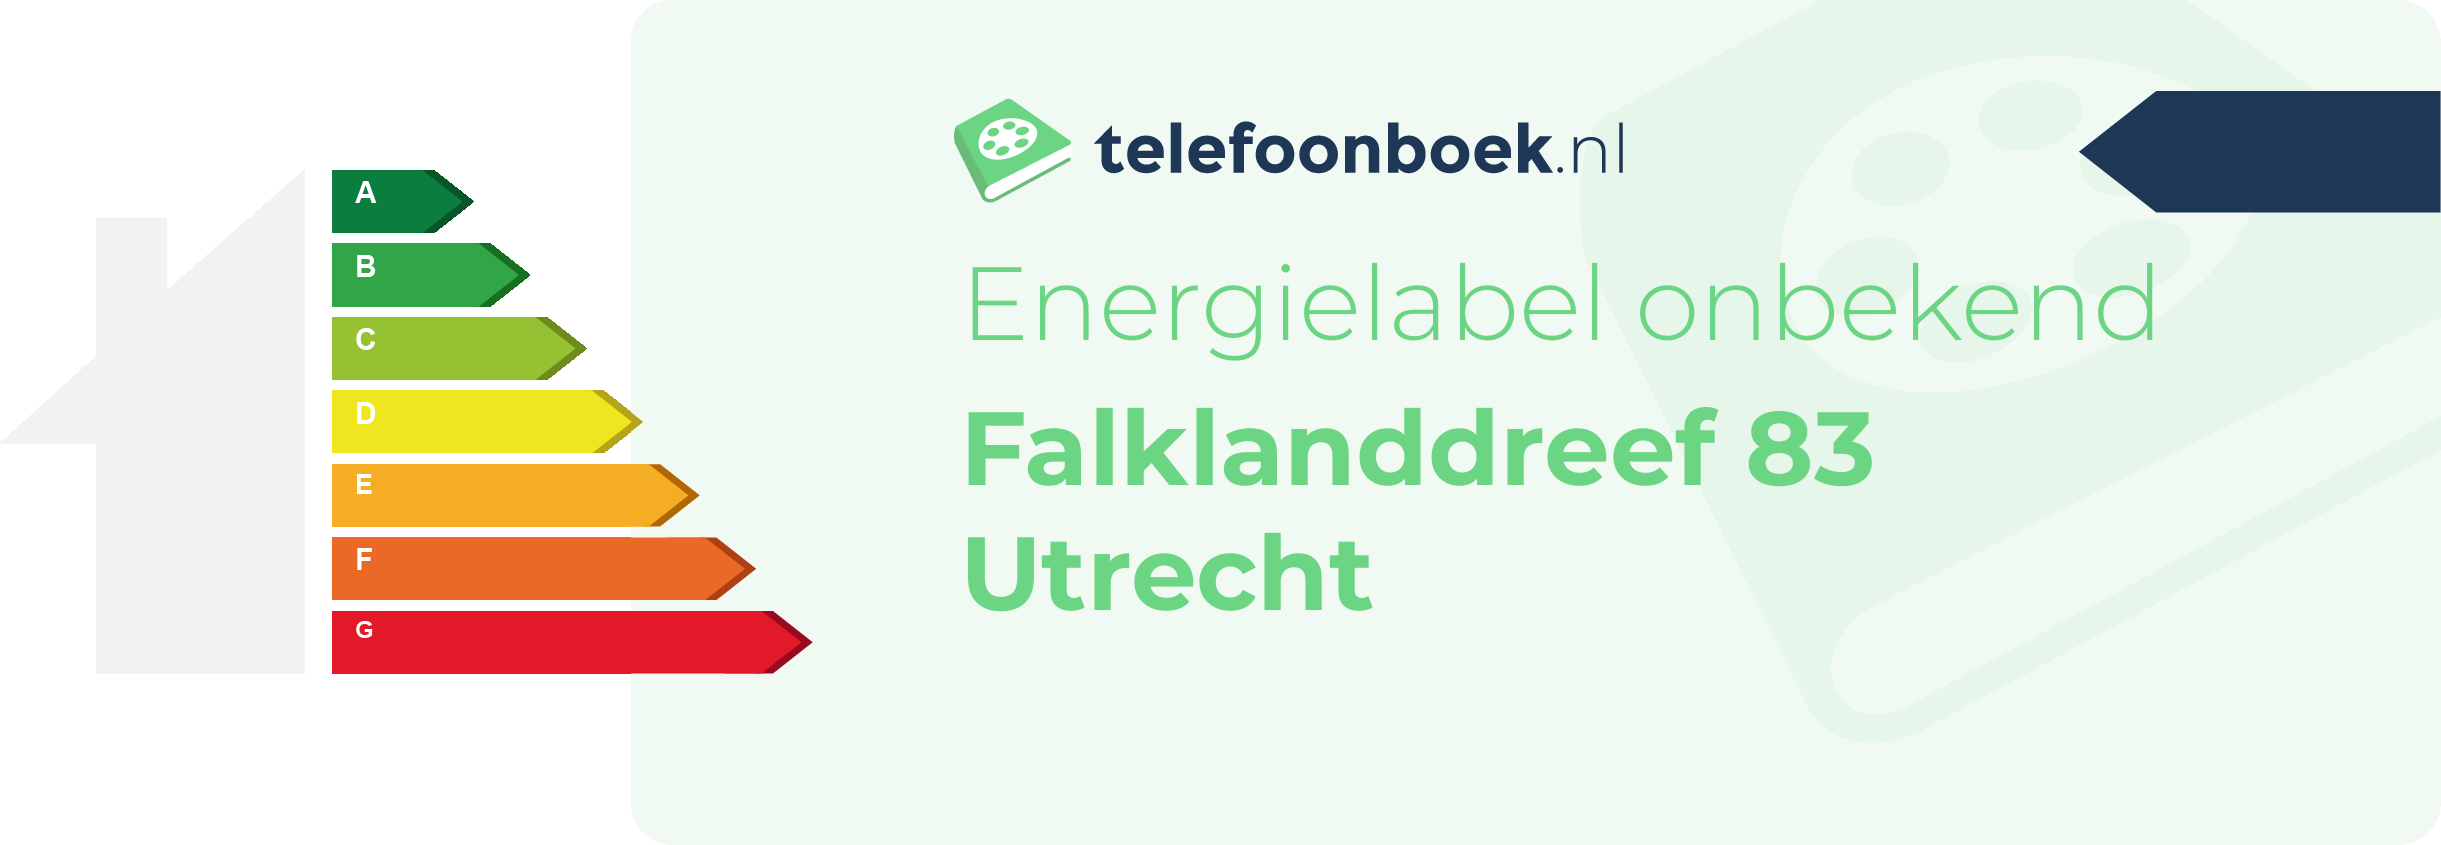 Energielabel Falklanddreef 83 Utrecht